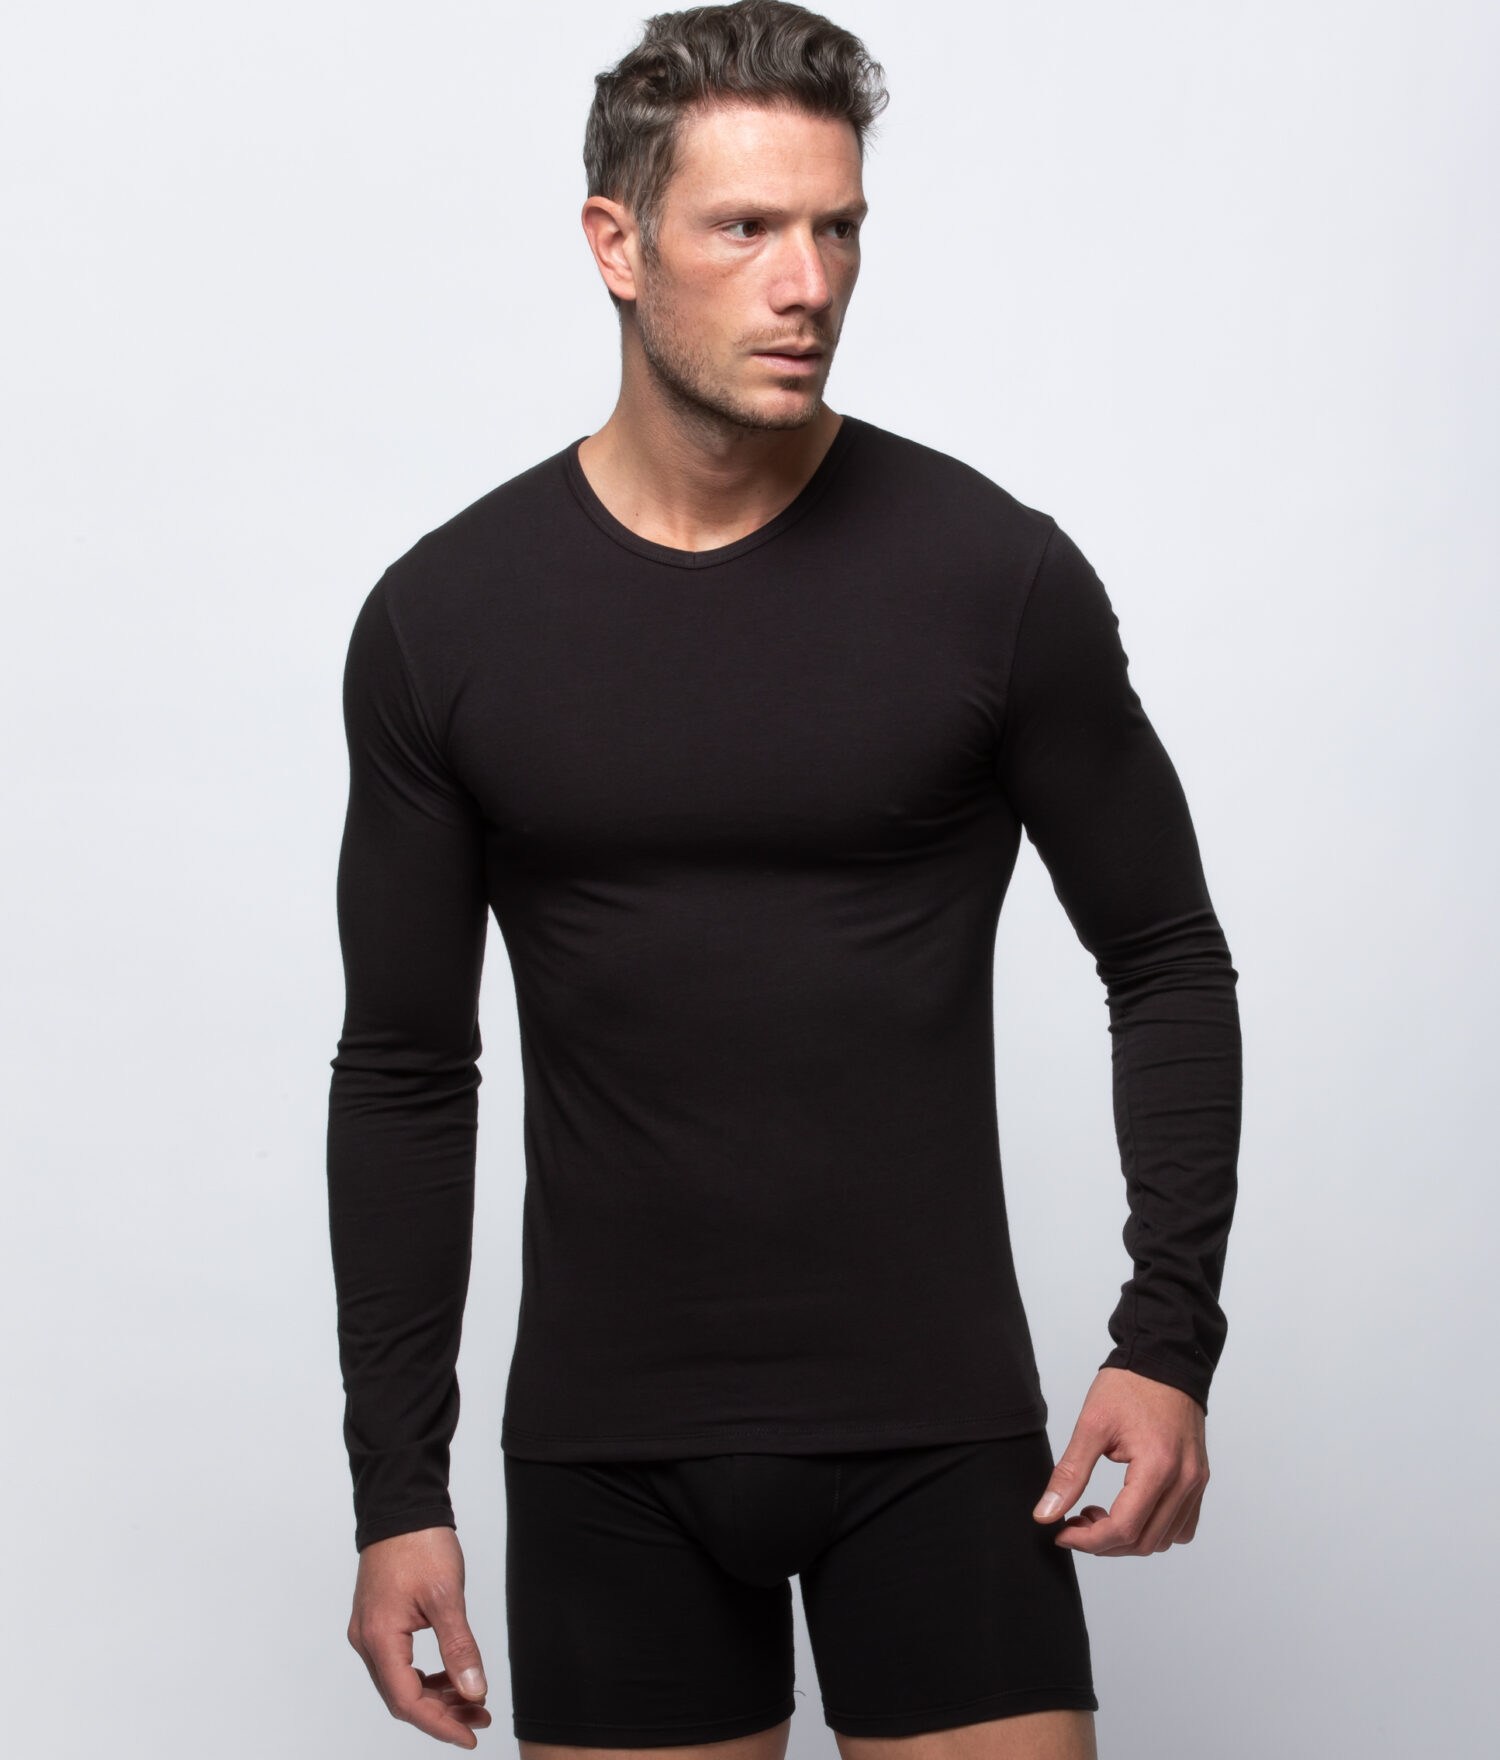 calentador de esquí de invierno S M L XL XXL térmico Camiseta térmica de manga larga para hombre ropa interior cálida de algodón